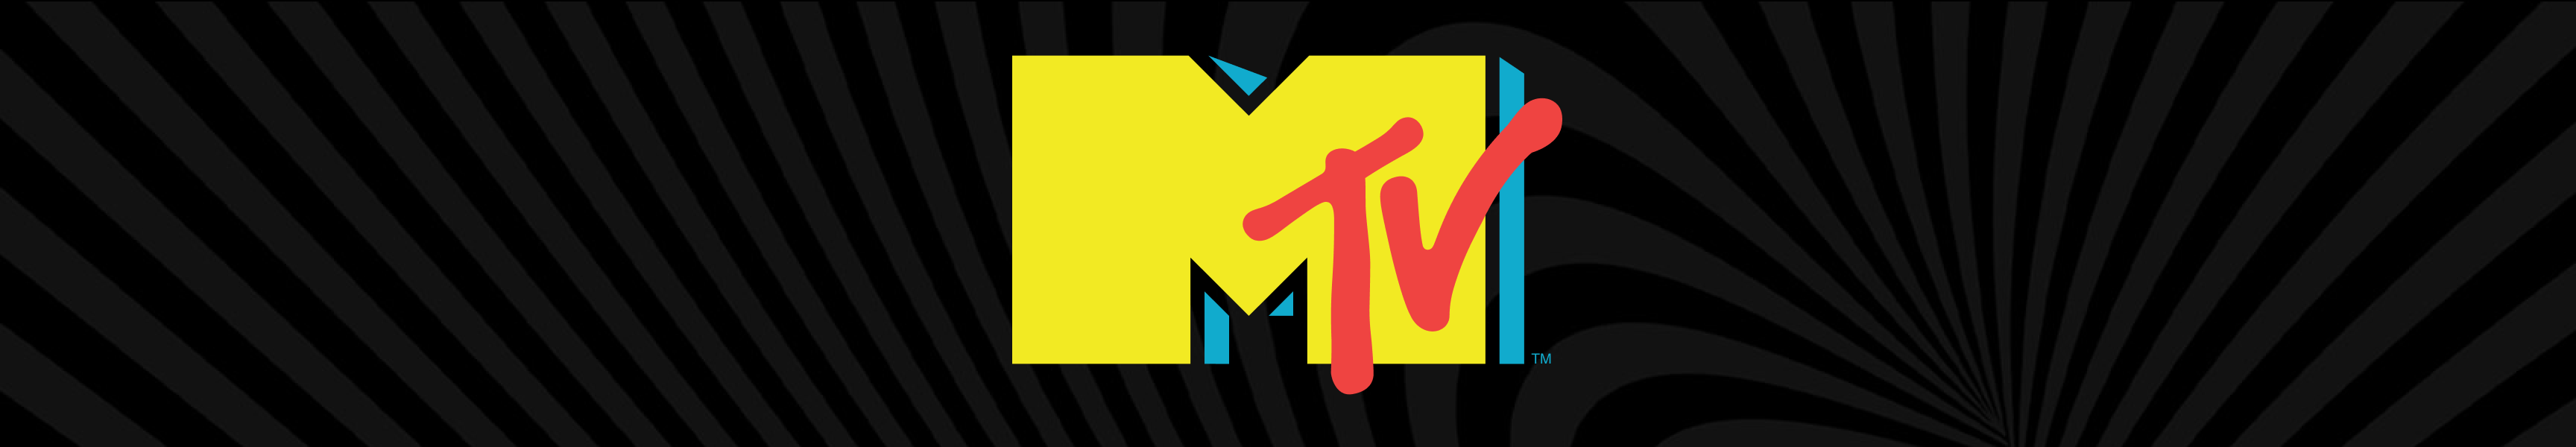 Almohadas de MTV